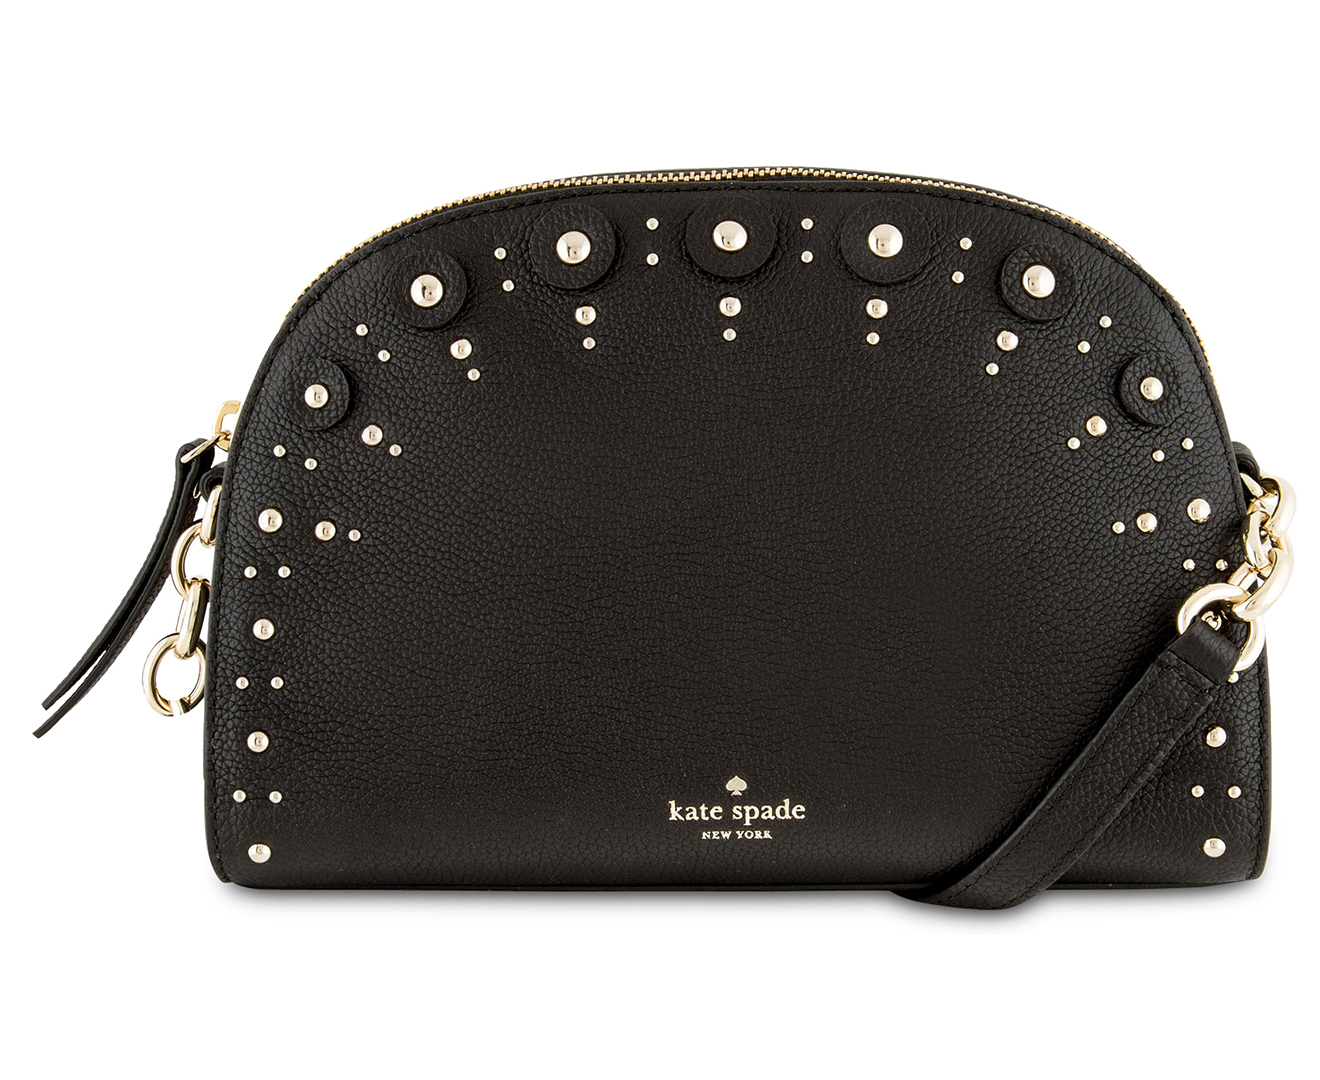 Kate Spade Black Velvet Evening Bag with Gold Logo - Handbags & Purses -  Costume & Dressing Accessories